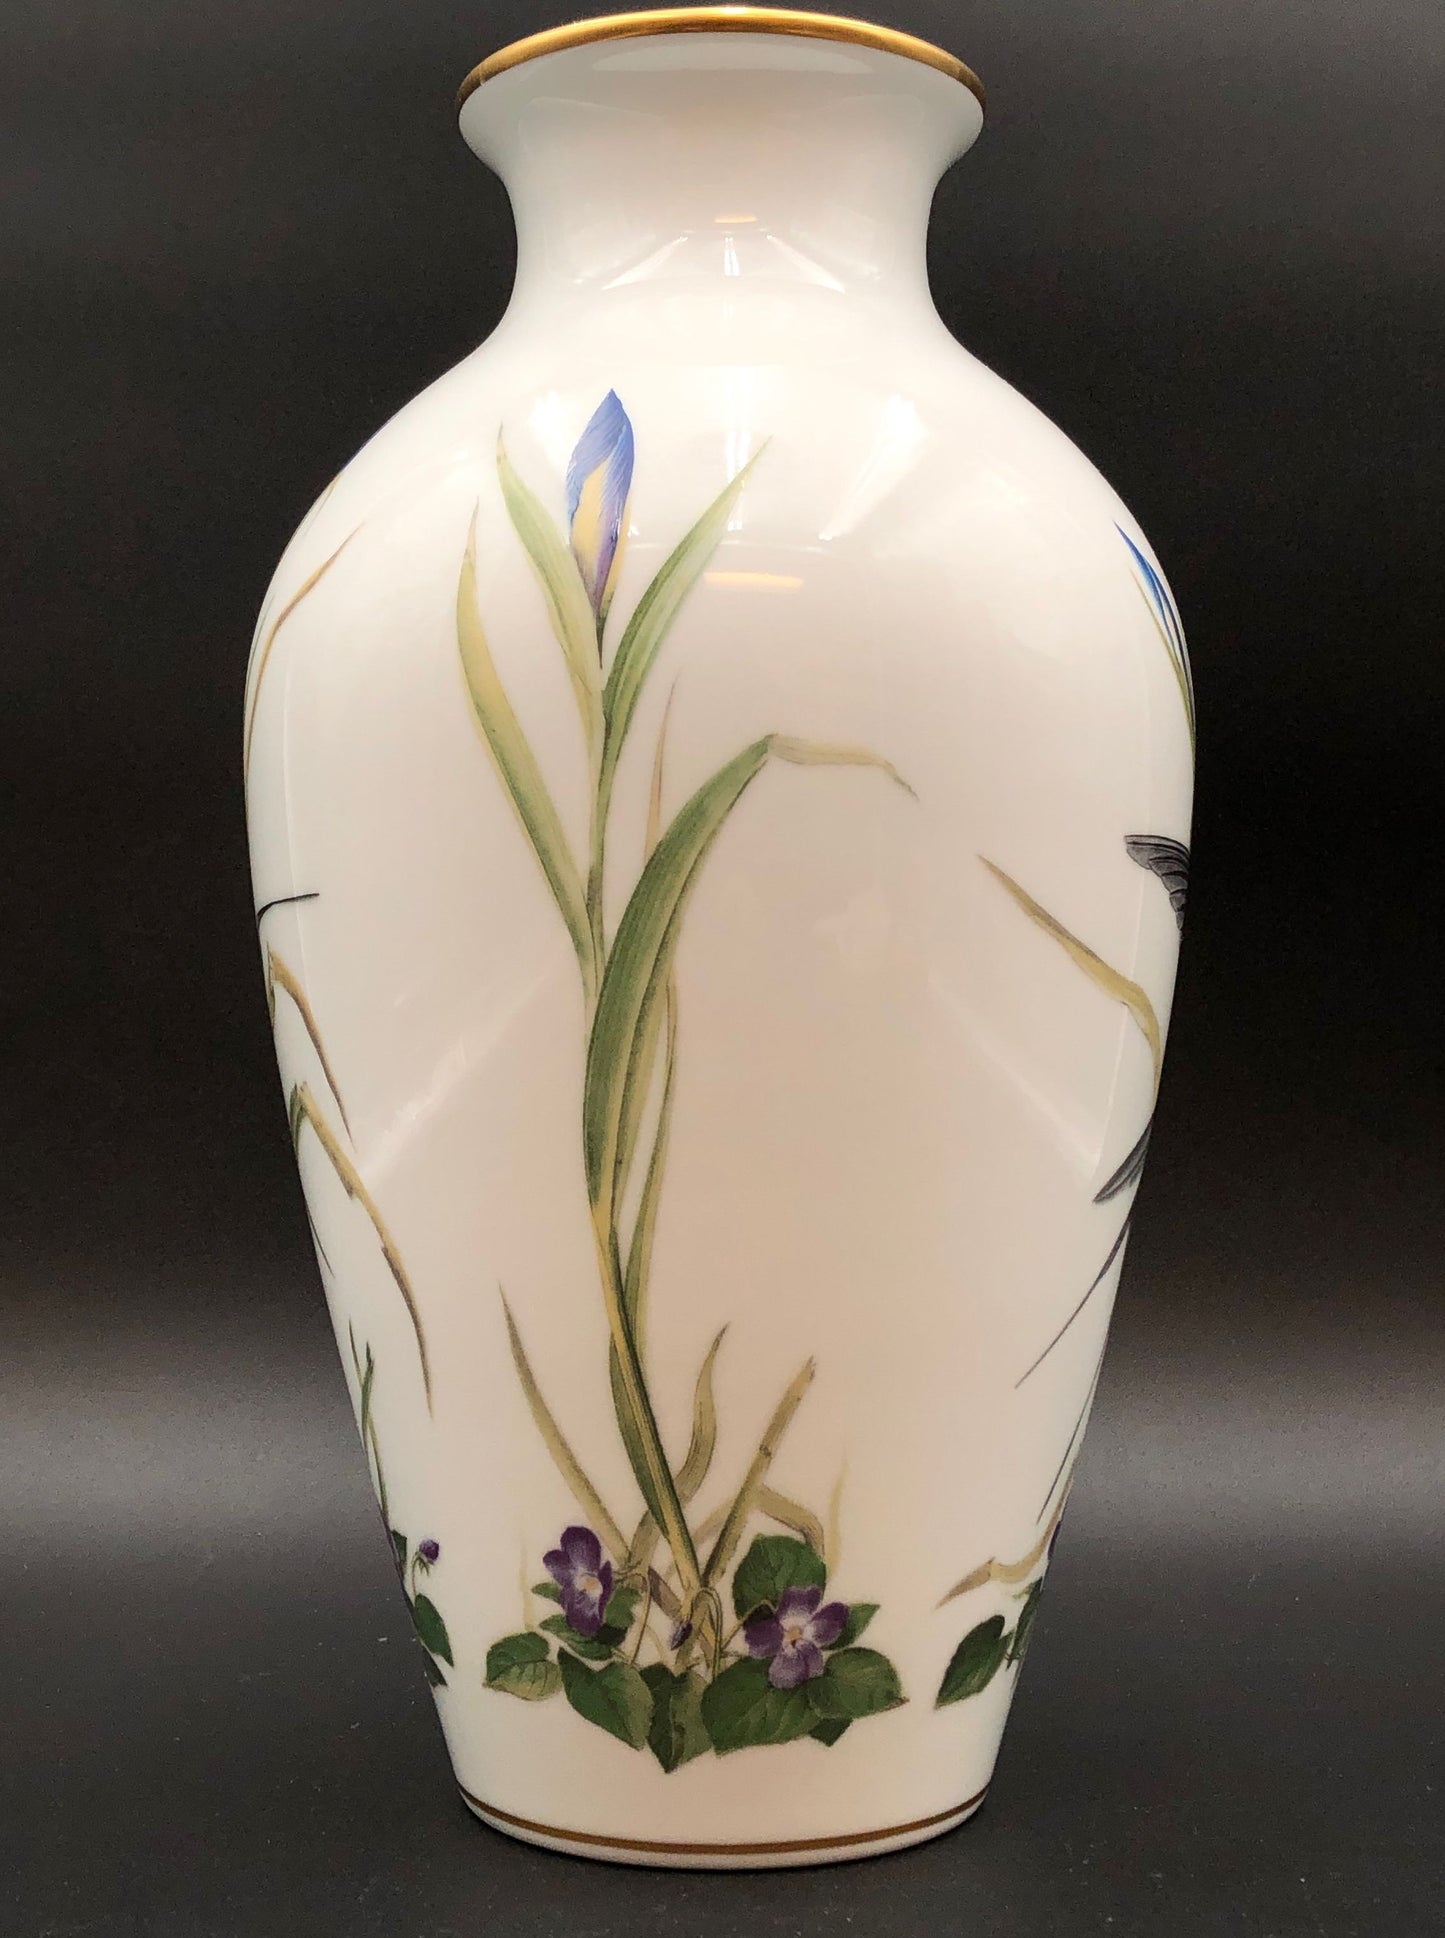 "The Meadowland Bird Vase" By Basil Ede -Franklin Porcelain 1980 Limited Edition